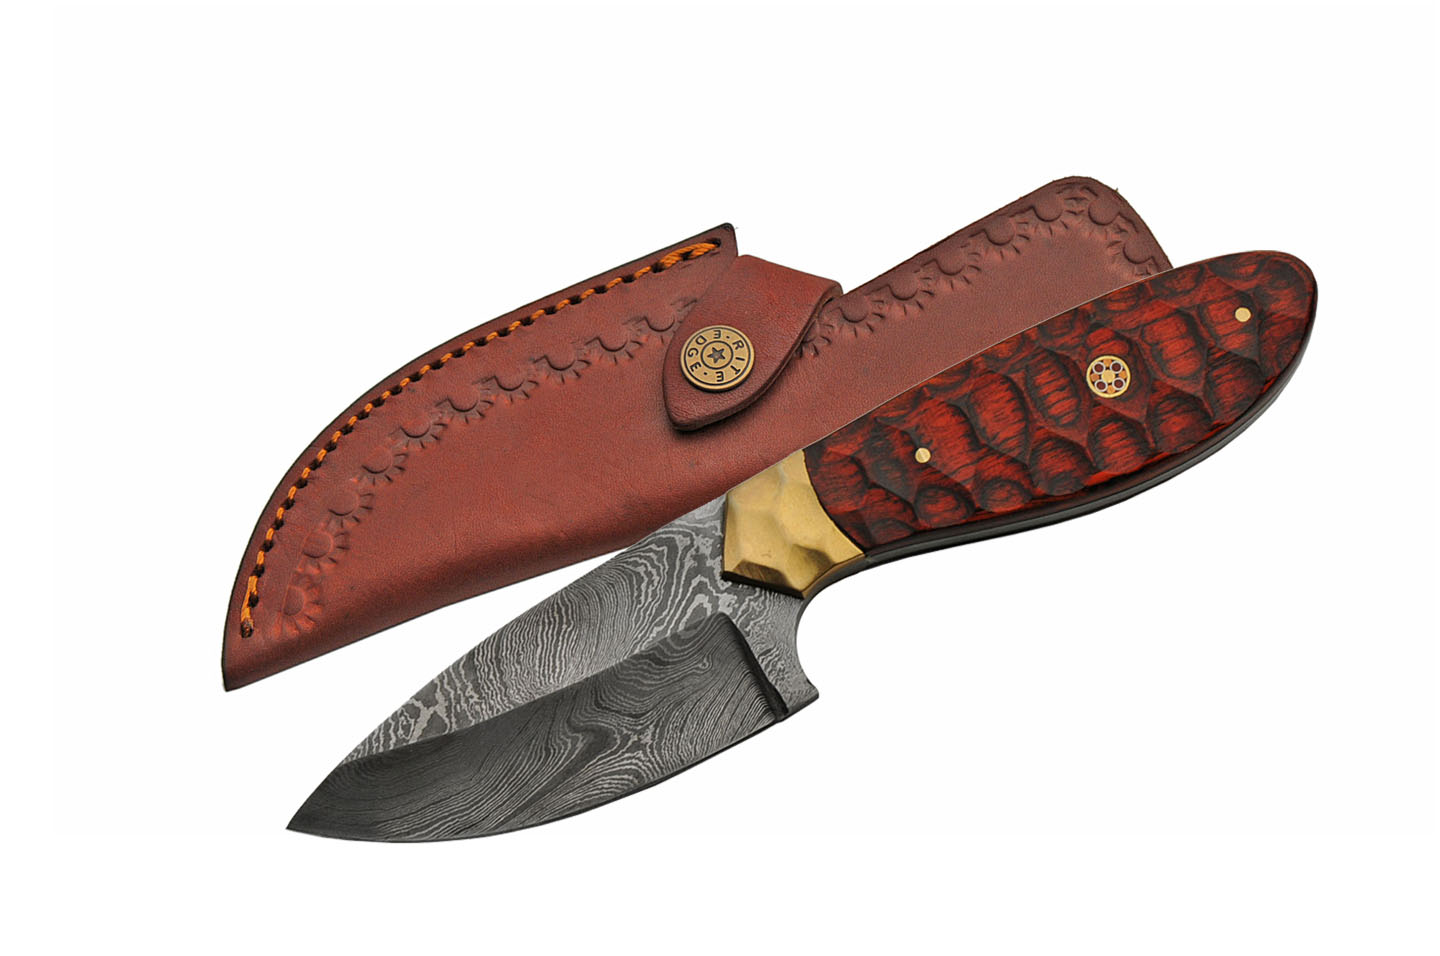 Hunting Knife Full Tang 9in. Overall Damascus Steel Blade Skinner Wood Handle